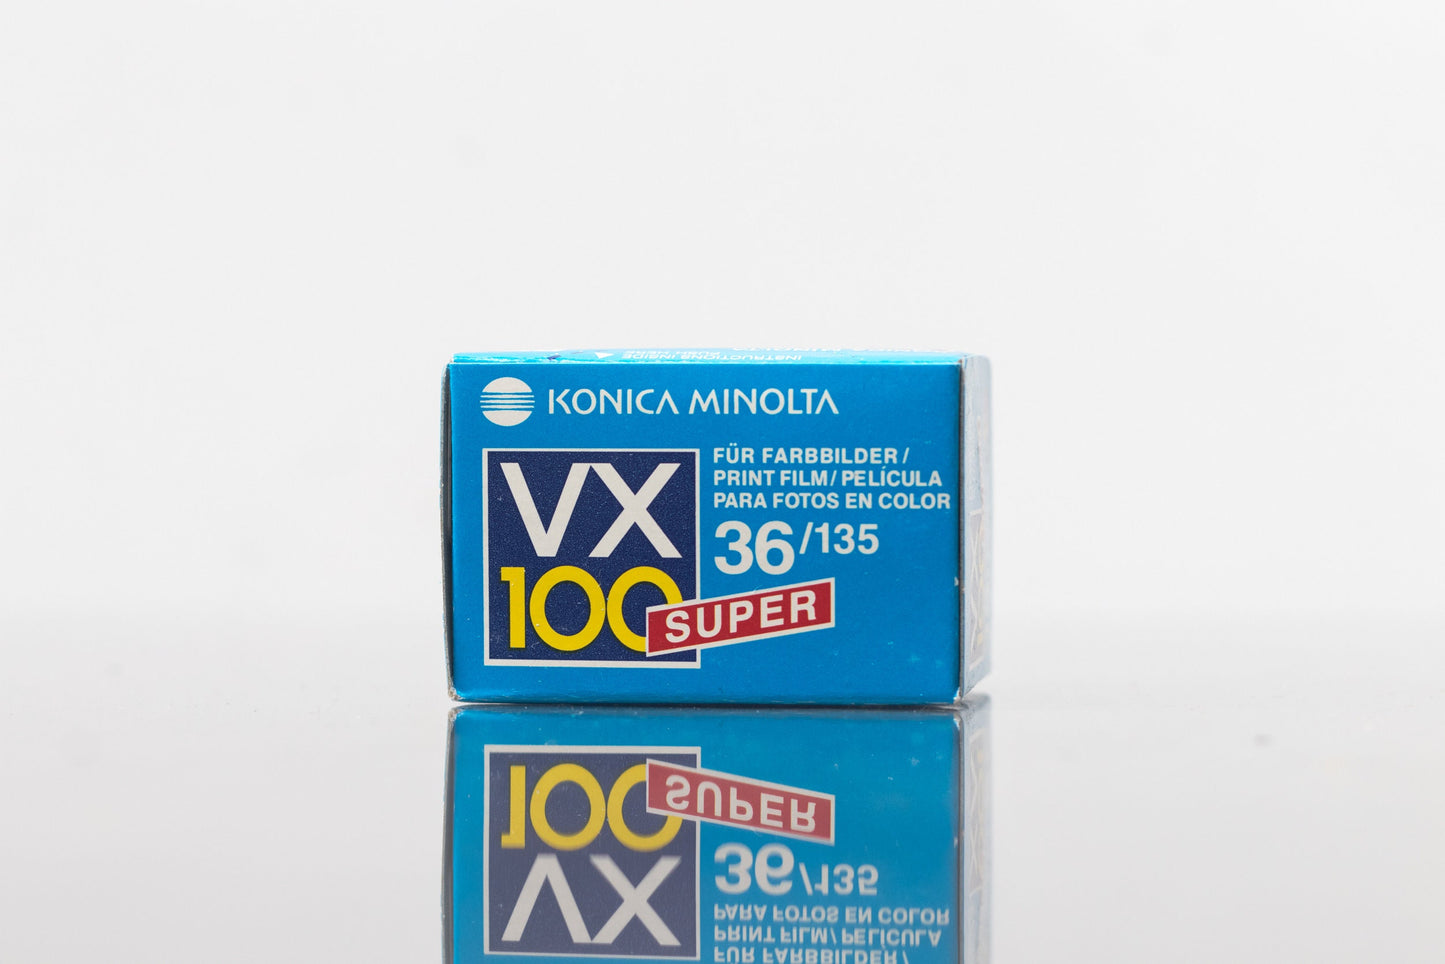 VX 100 Super 36 Expired 35mm Film Camera | Expired 2010